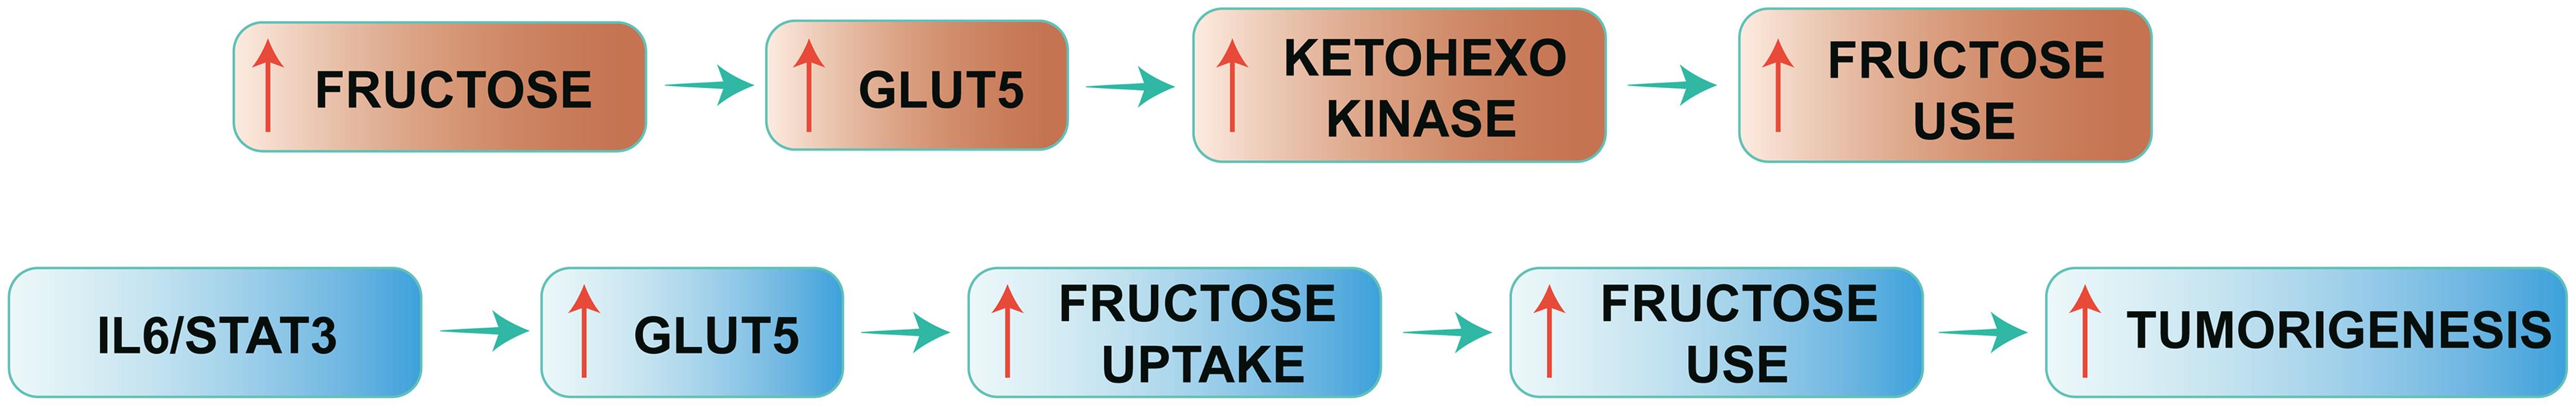 Relationship among fructose metabolism, glut5, hexokinase and tumorigenesis.